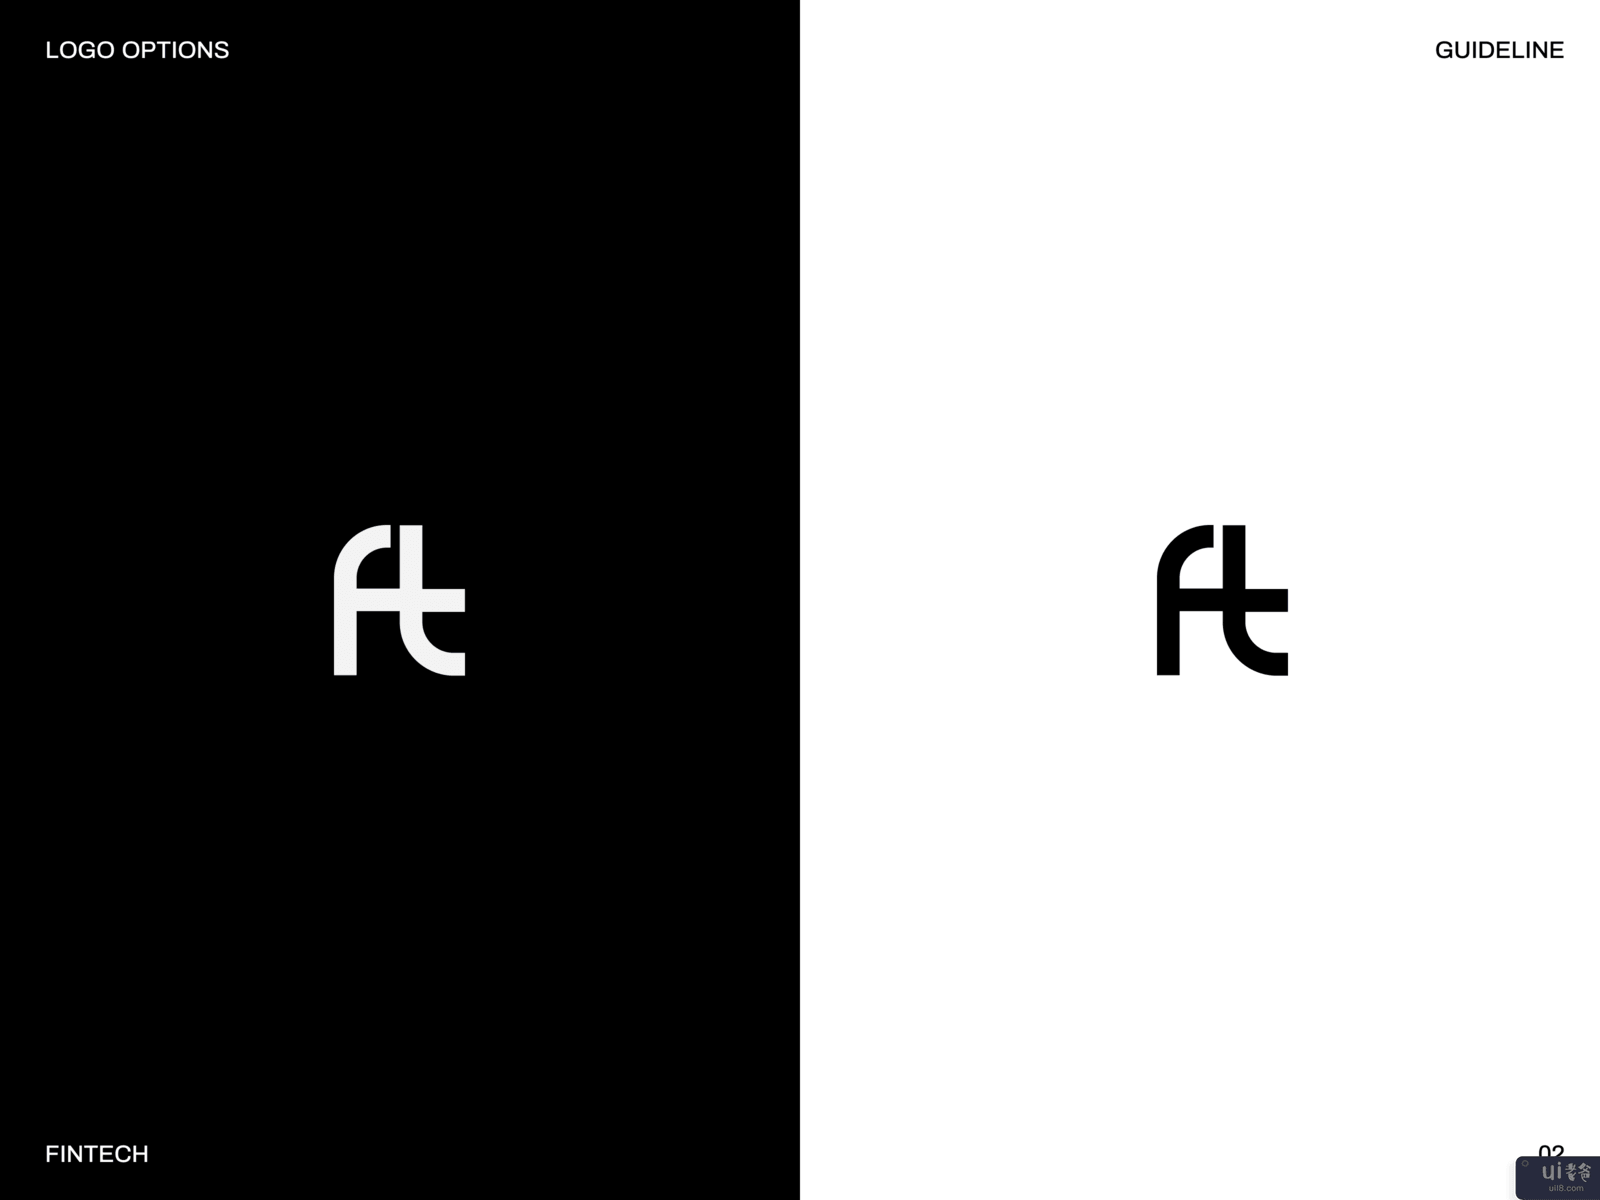 ft - 金融科技公司的品牌设计(ft - Brand Design for FinTech Company)插图6